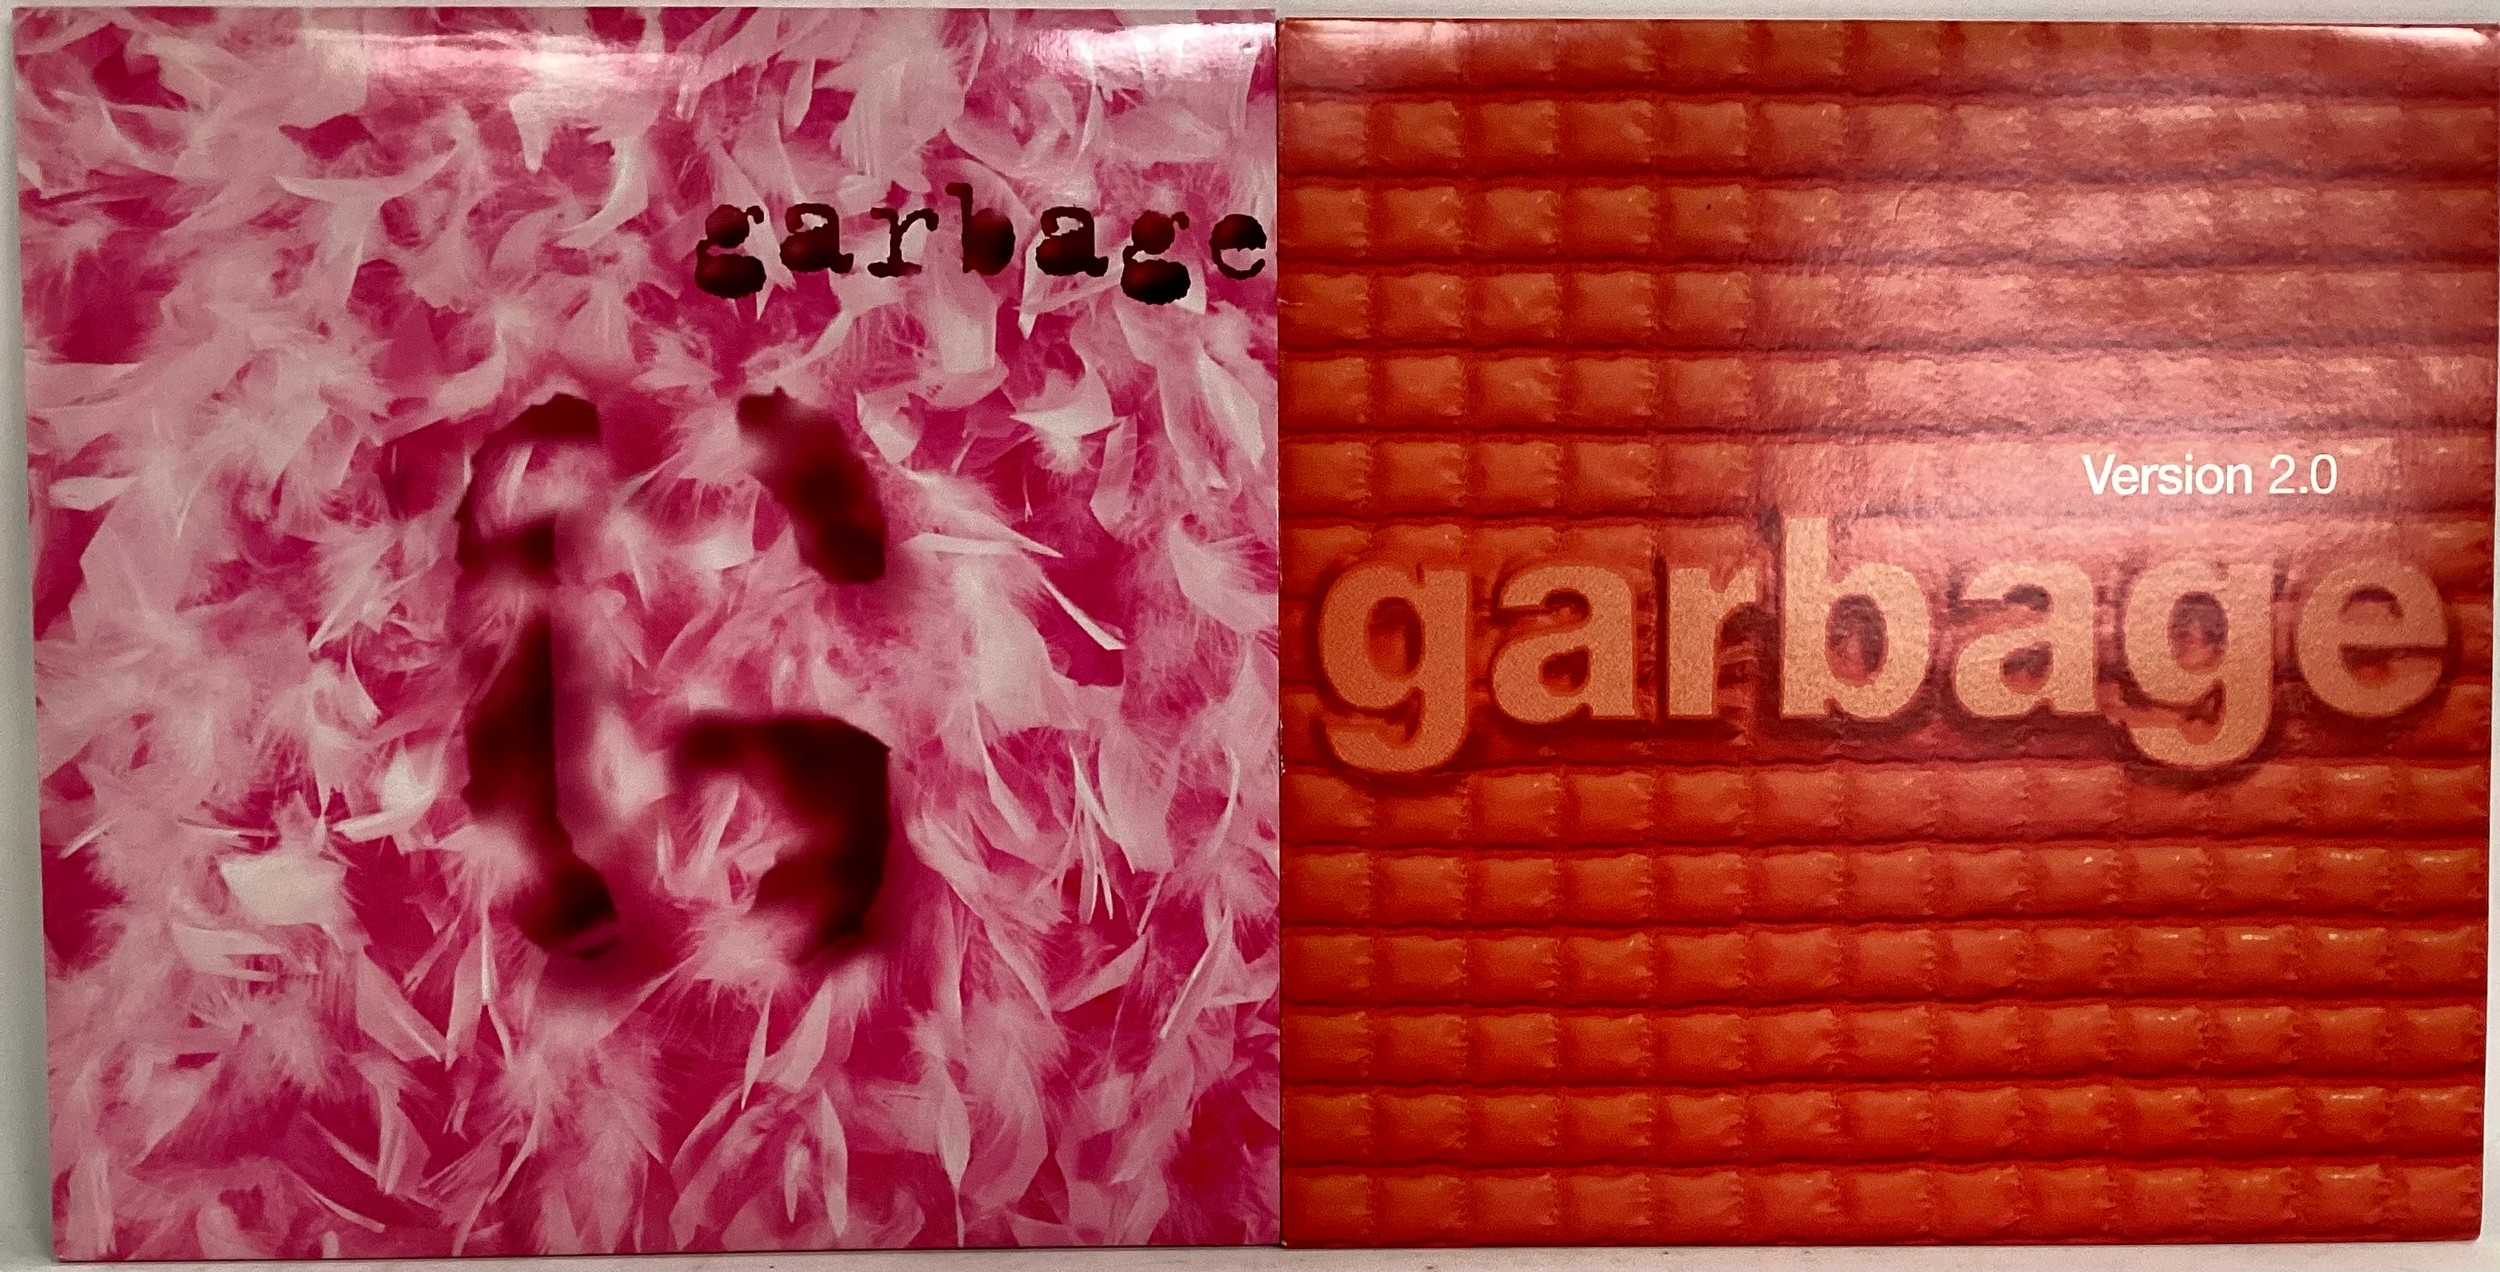 GARBAGE VINYL LP RECORDS X 2